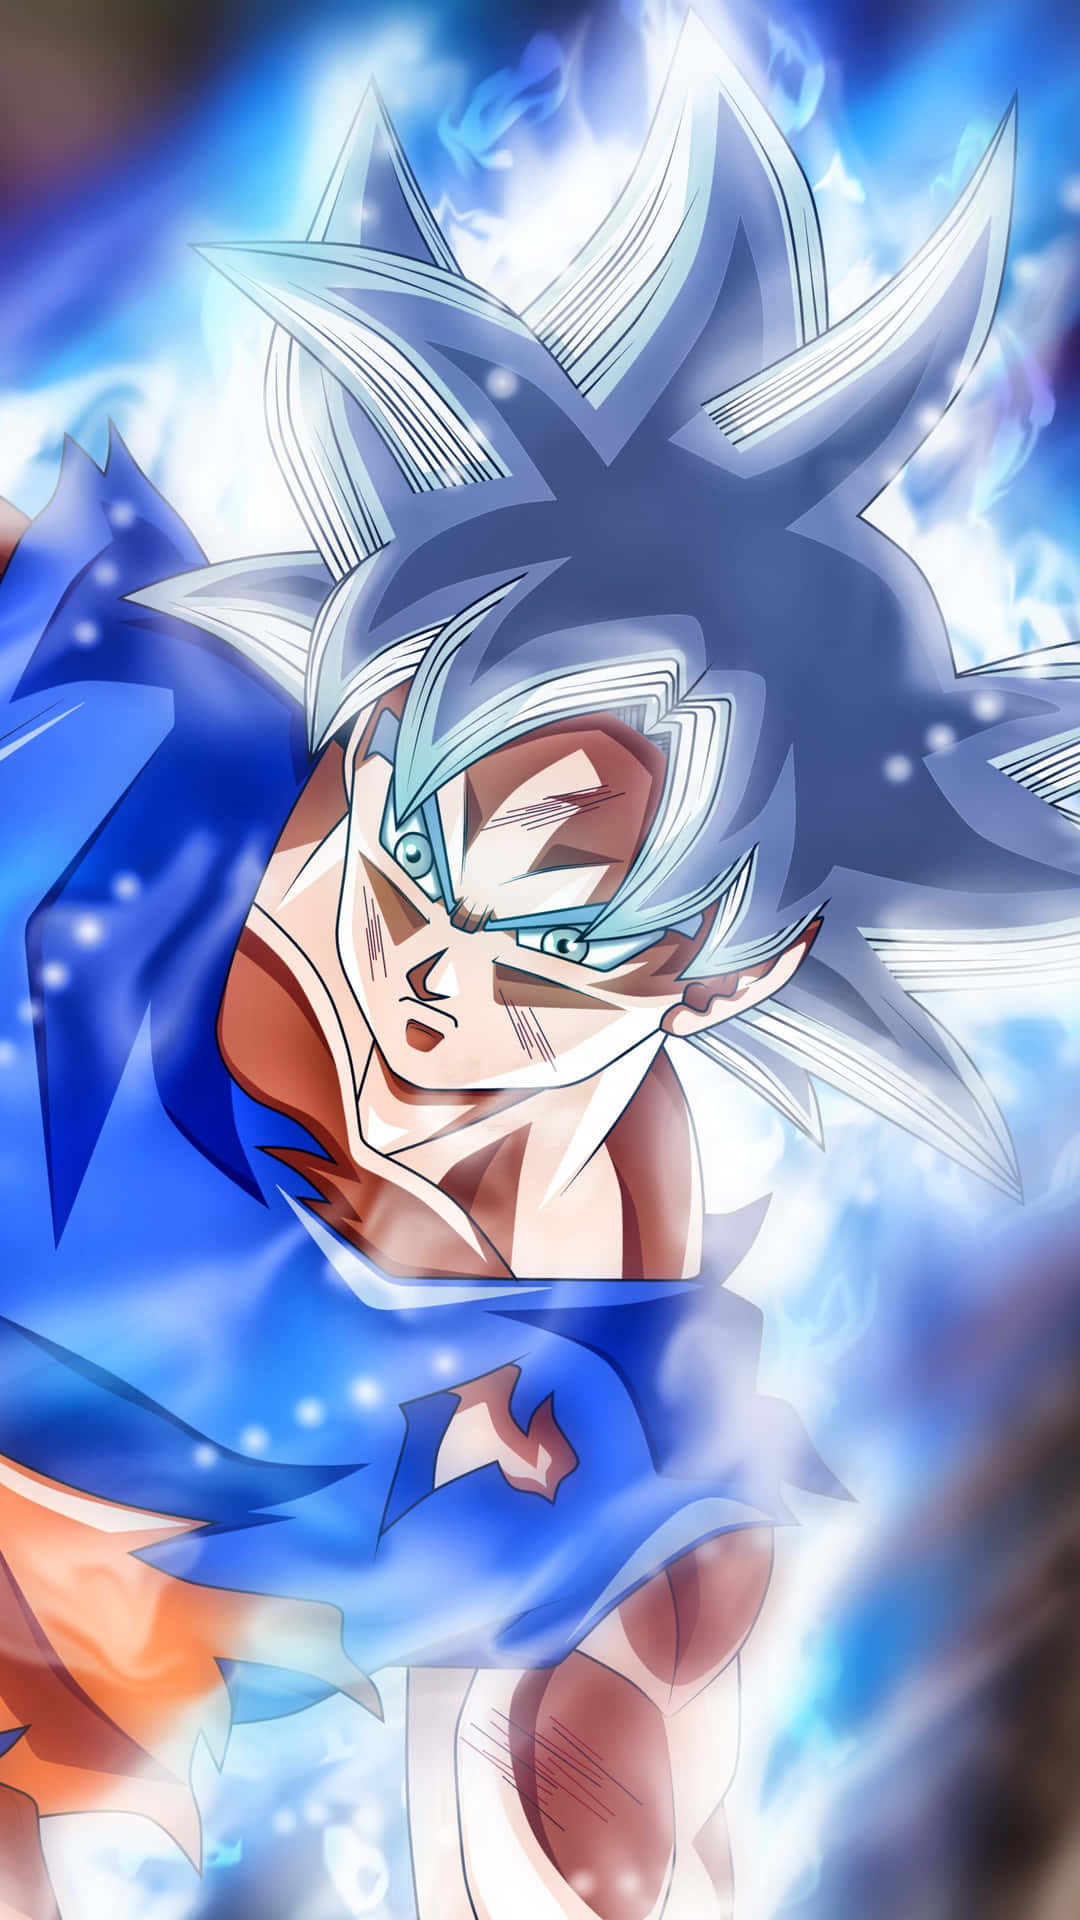 Awaken Your True Power with Goku Unleashing Ultra Instinct